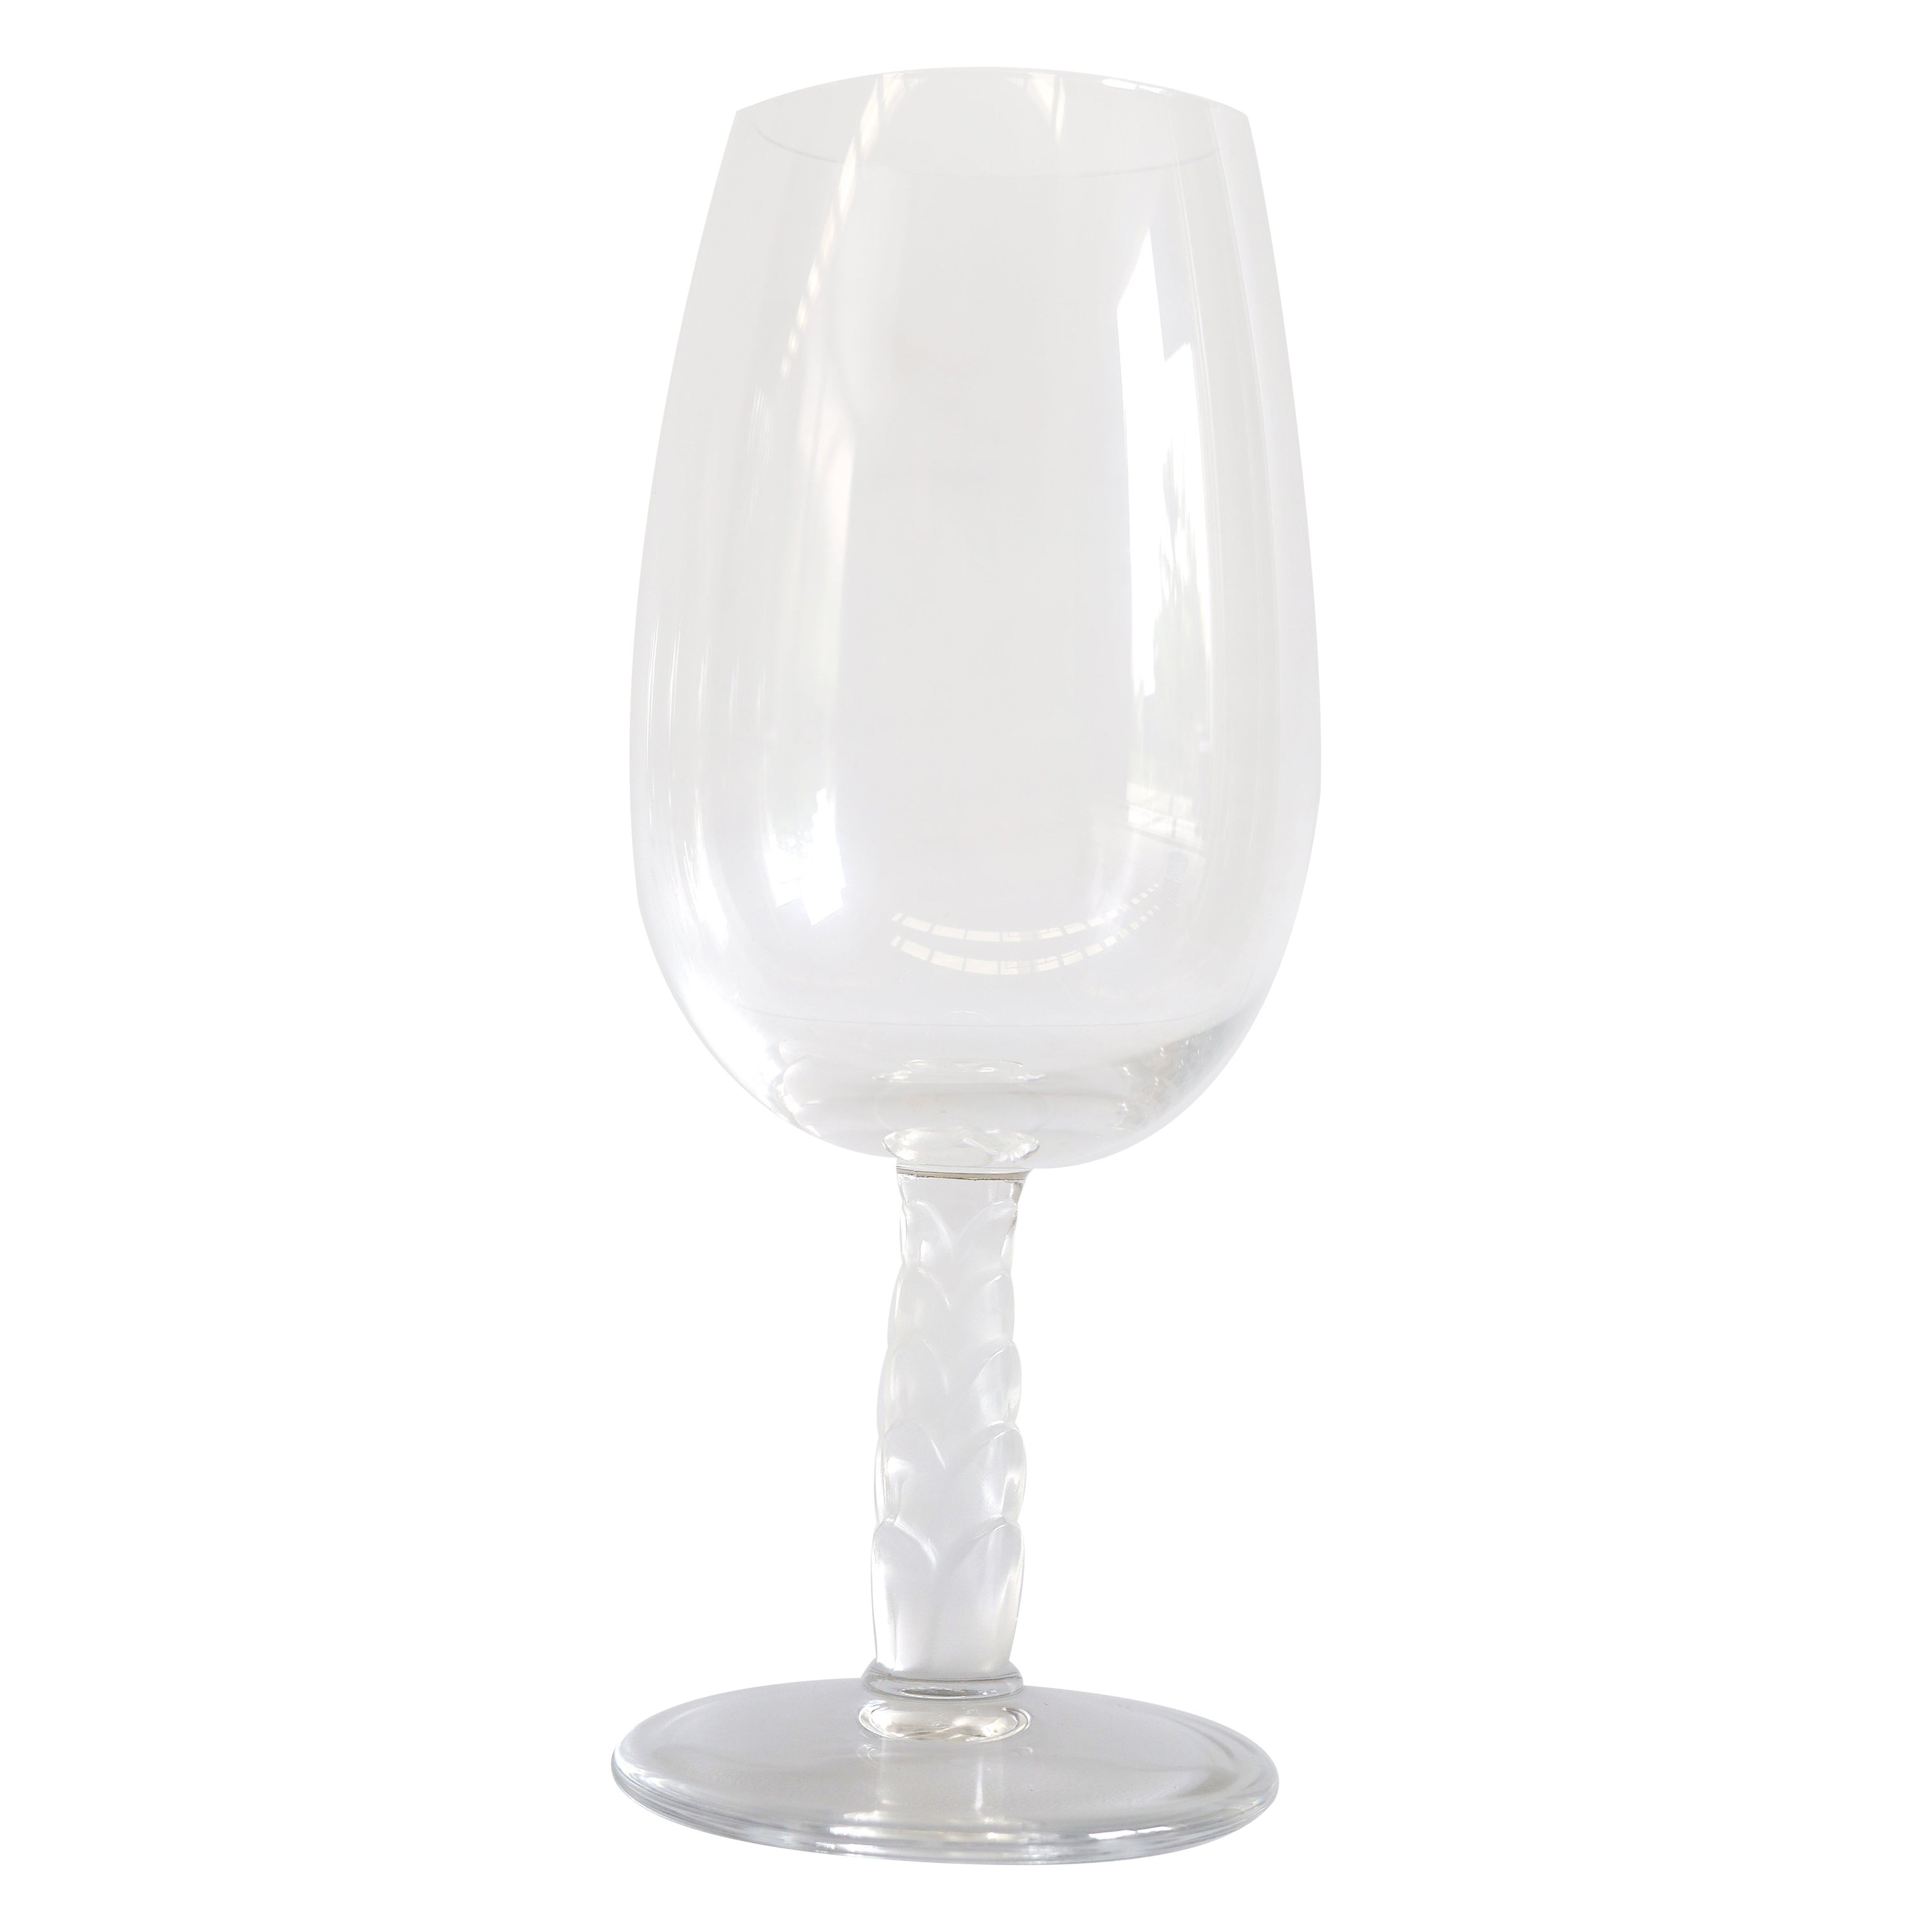 Ensemble de 6 verres «entia » de Lalique